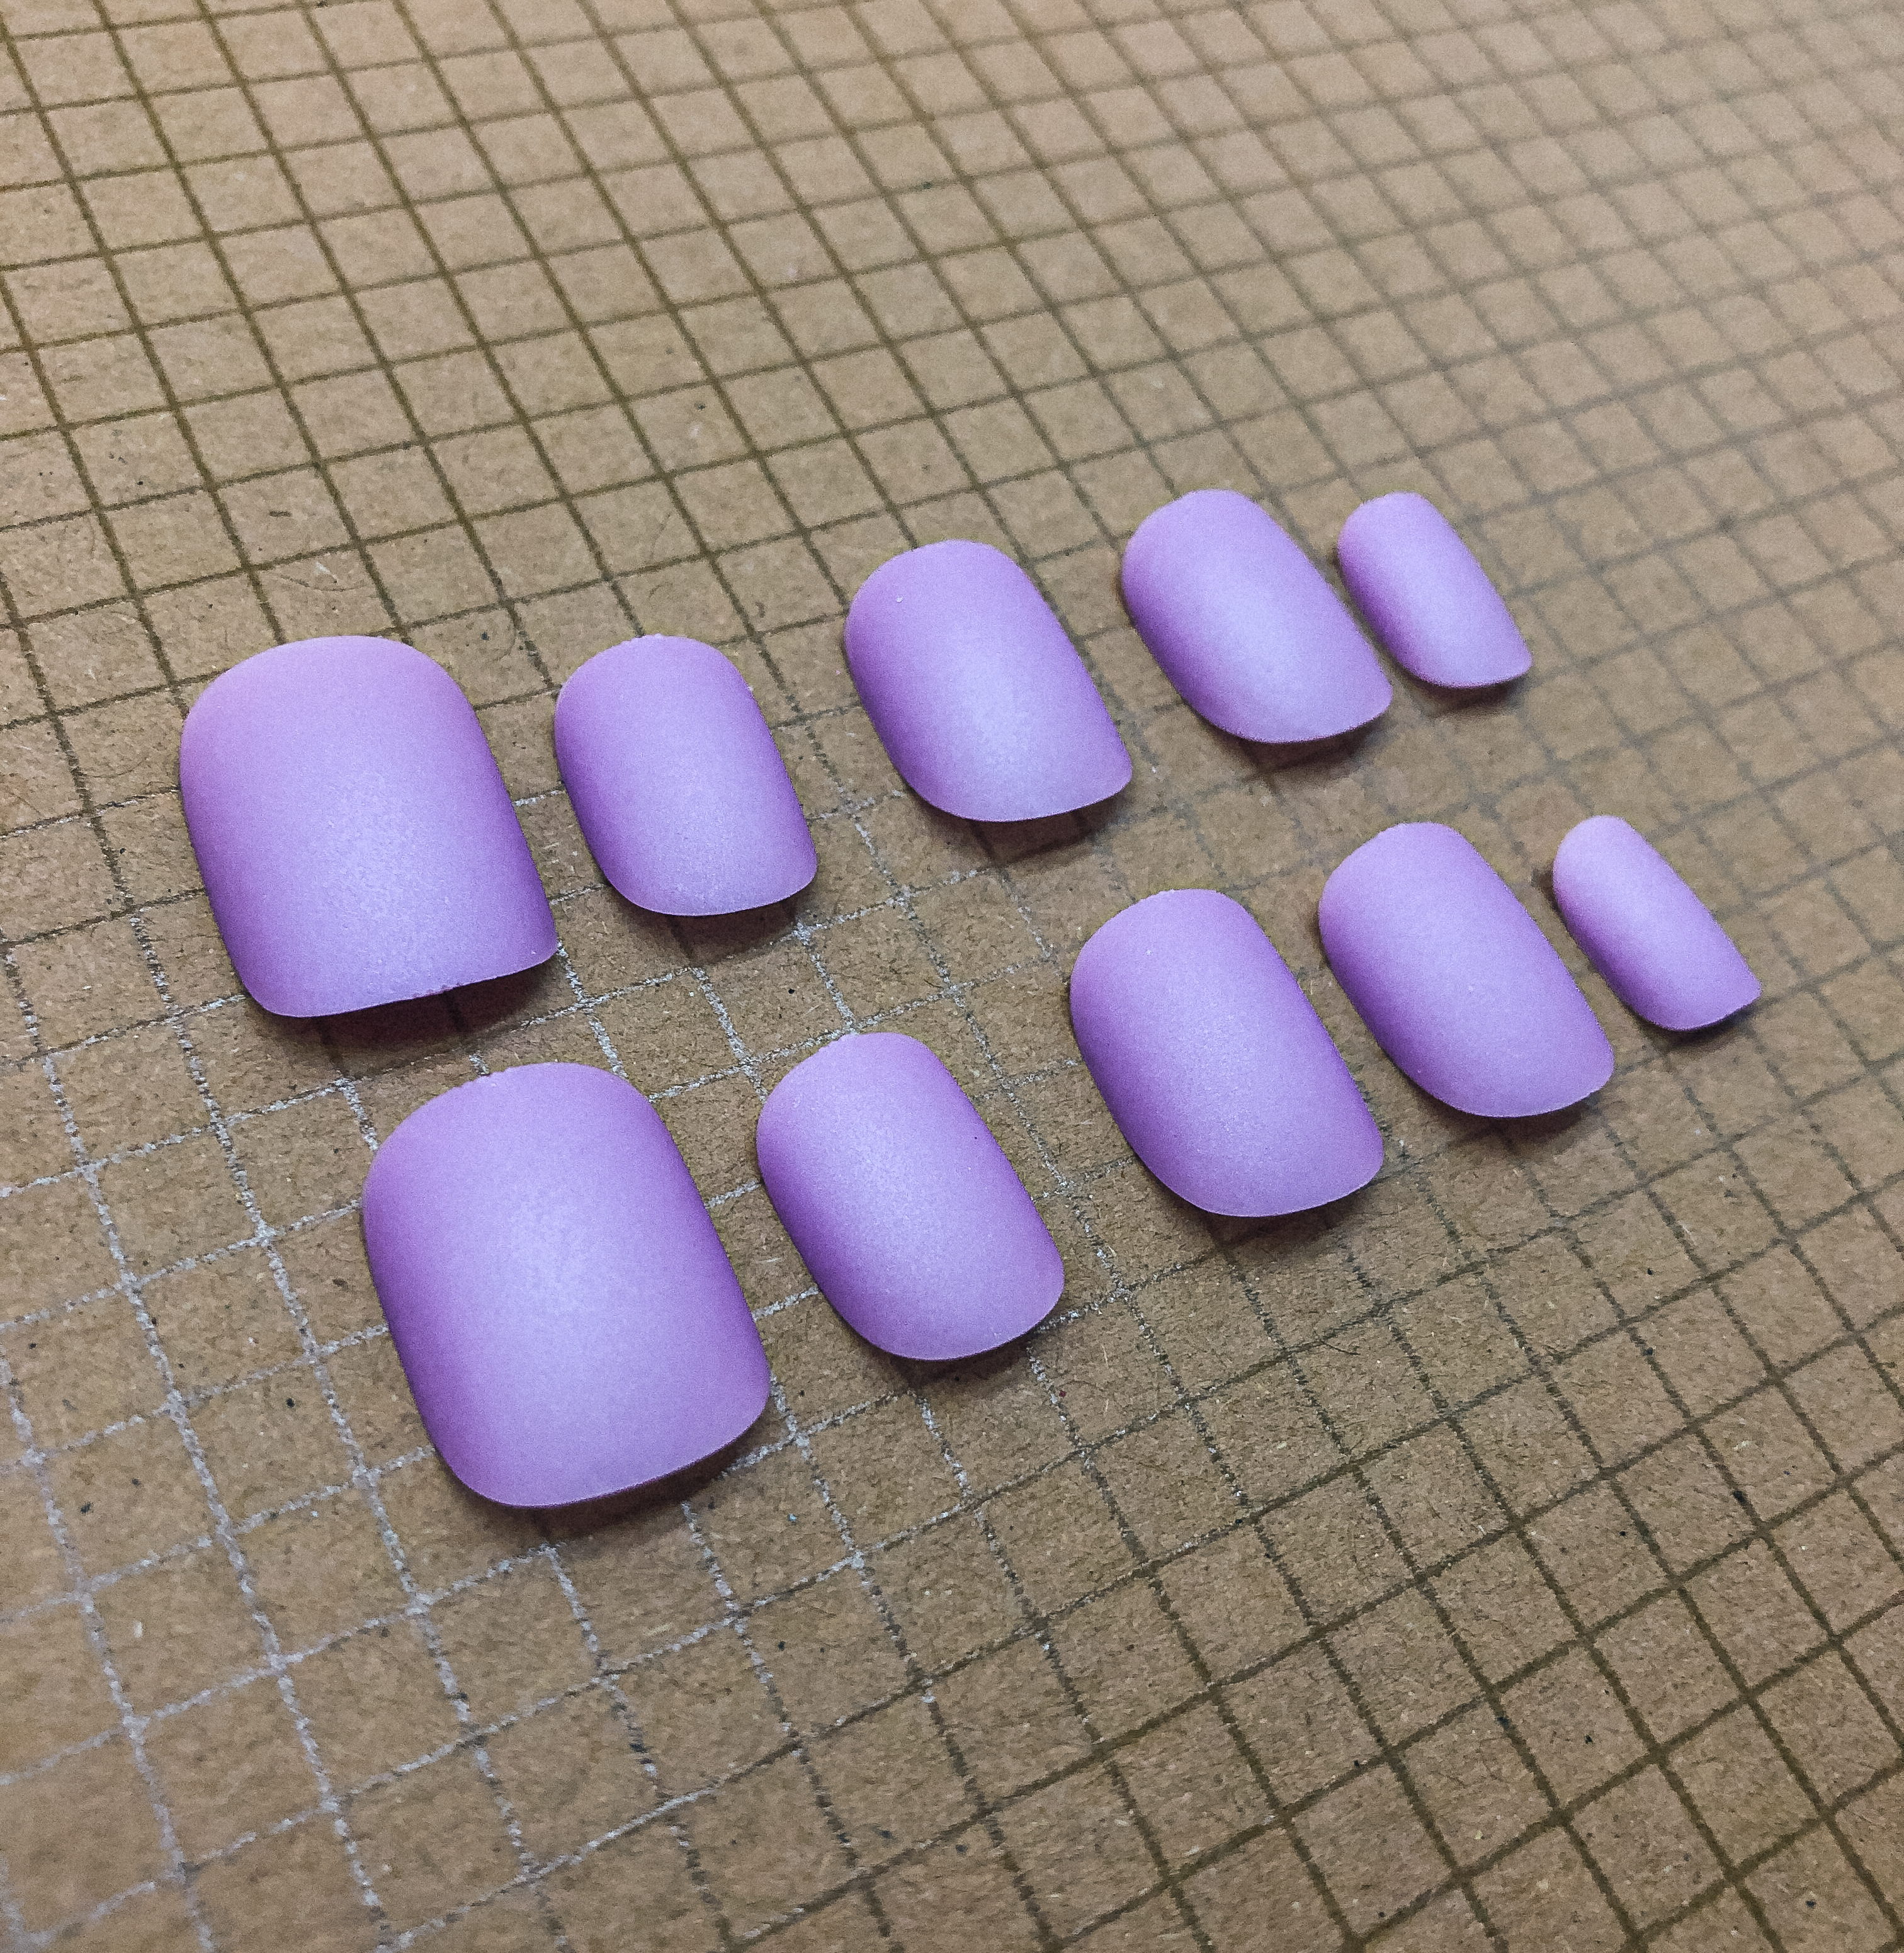 24 Xred Purple Fake Nails Art Tips Acrylic Nail False Full Cover ManiY^y^ |  eBay